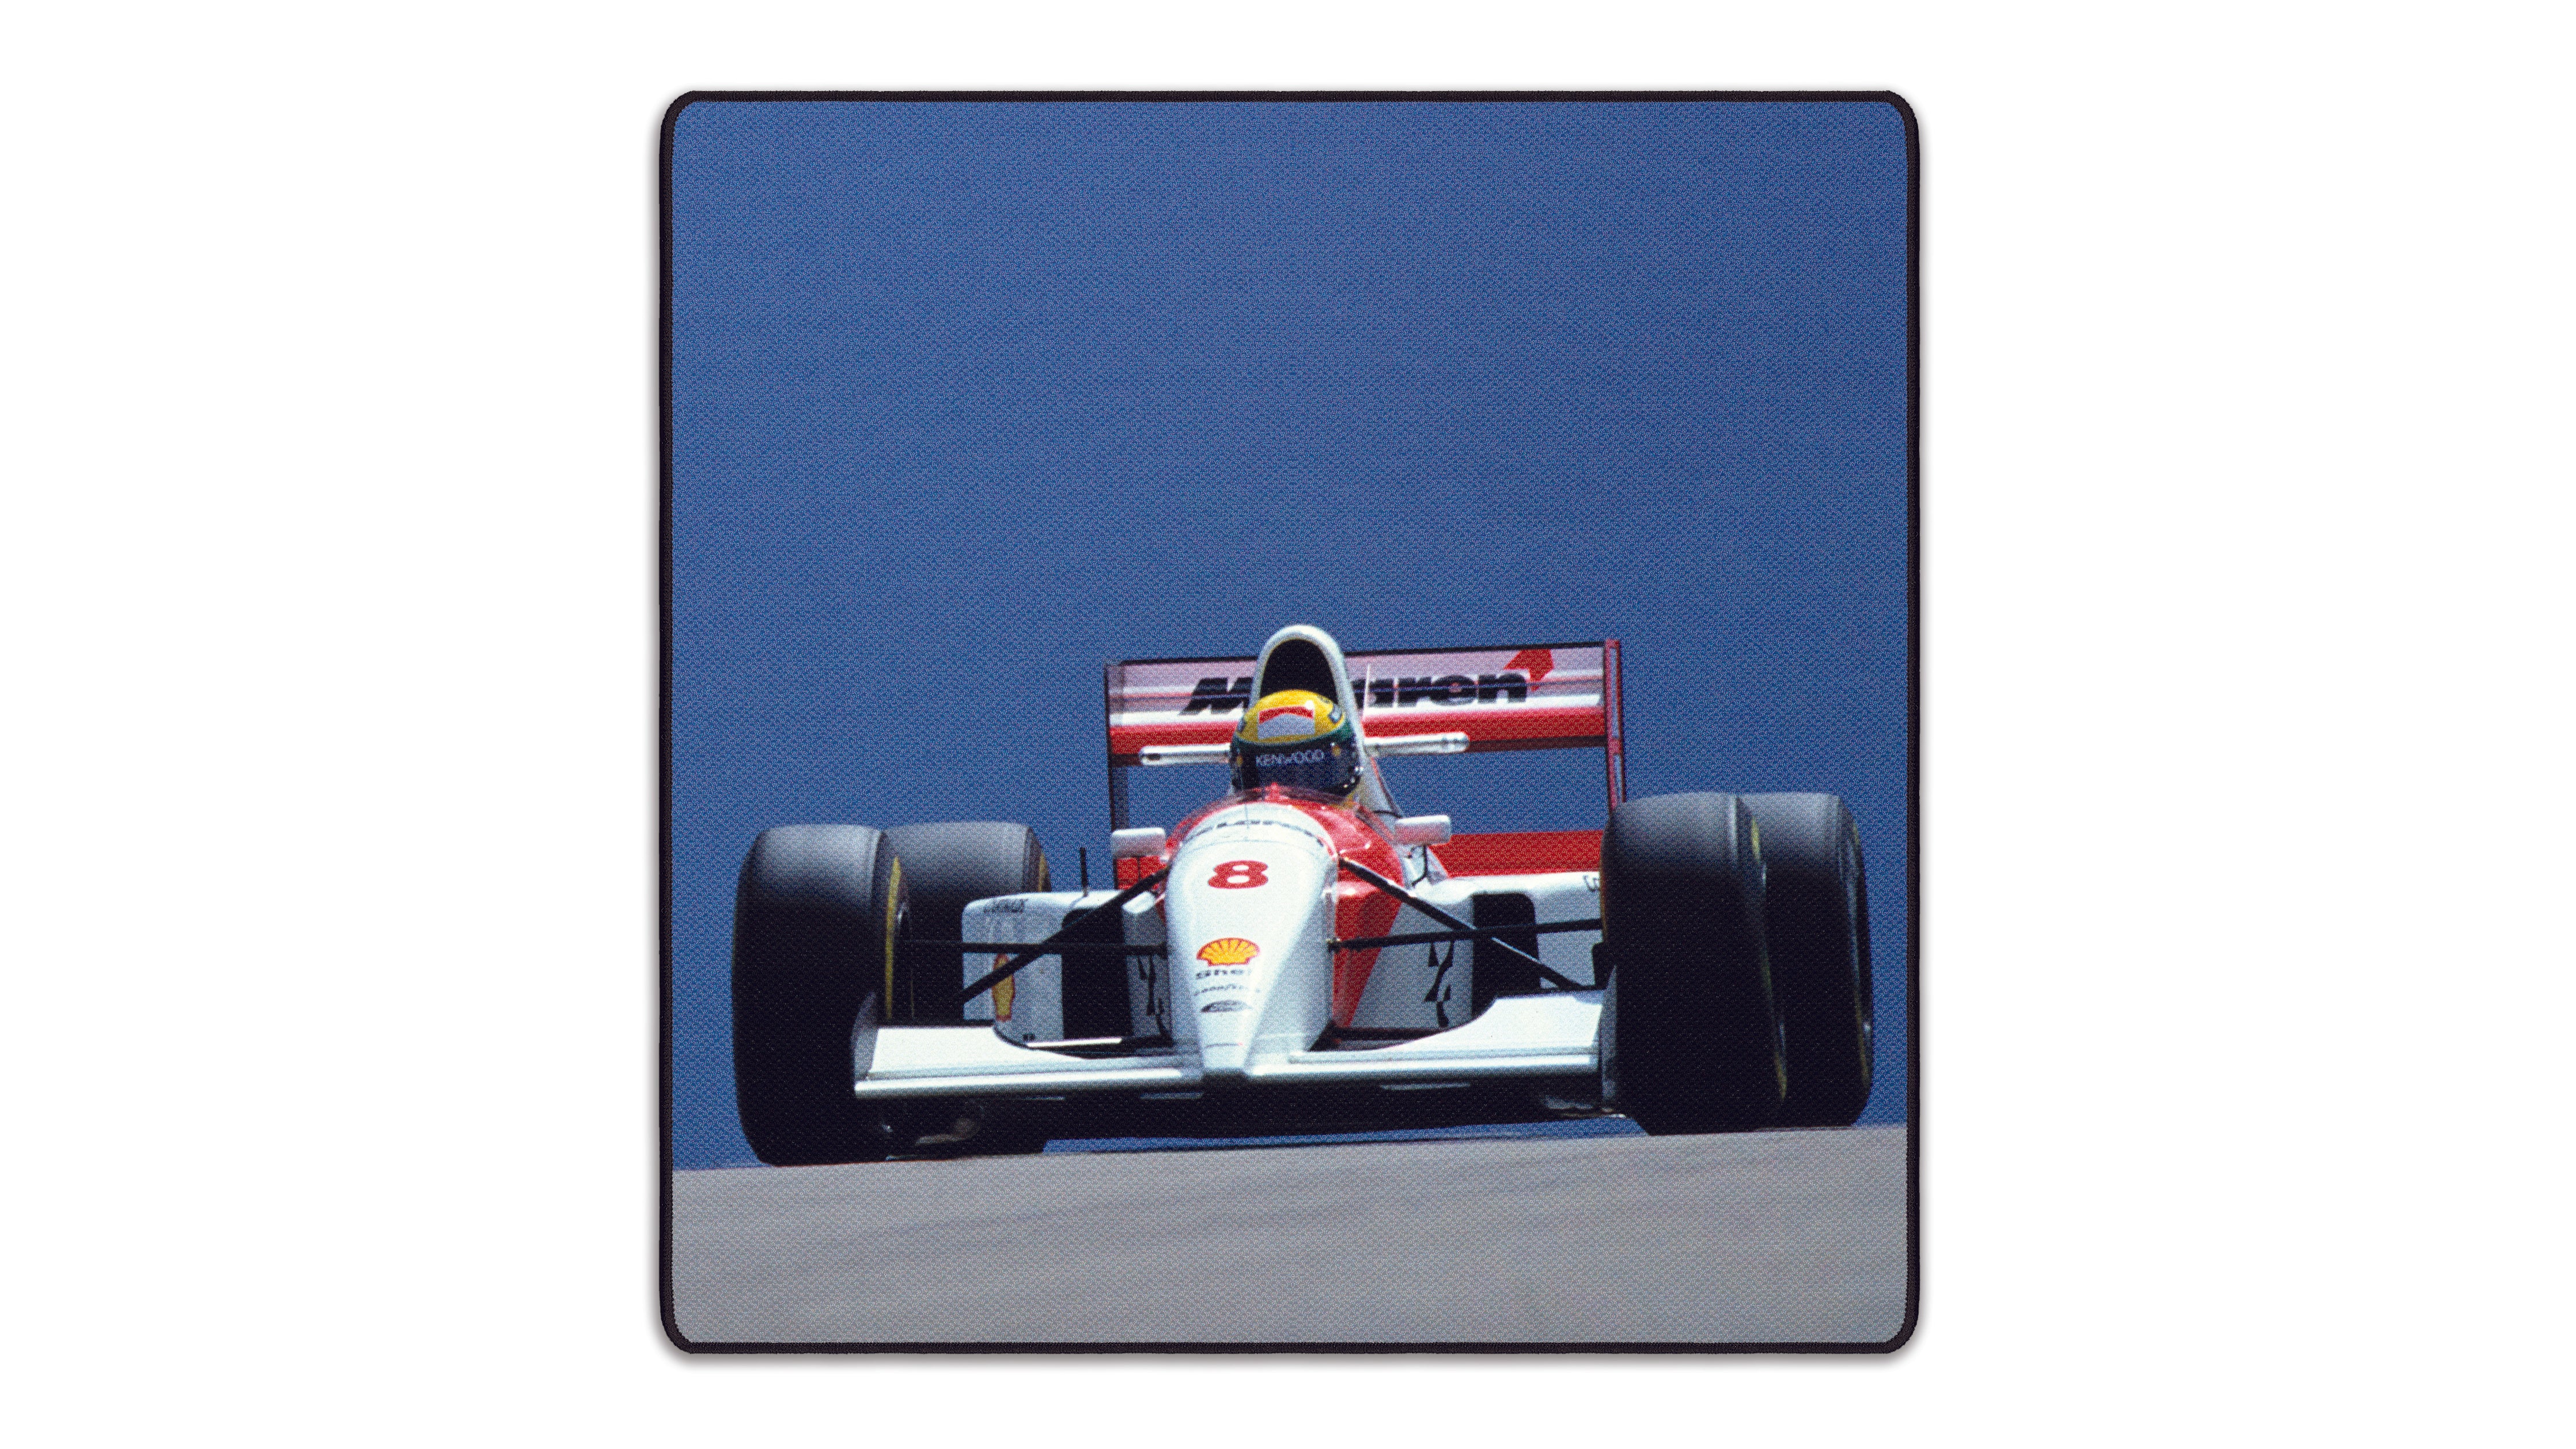 British GP, '93 - The Mousepad Company